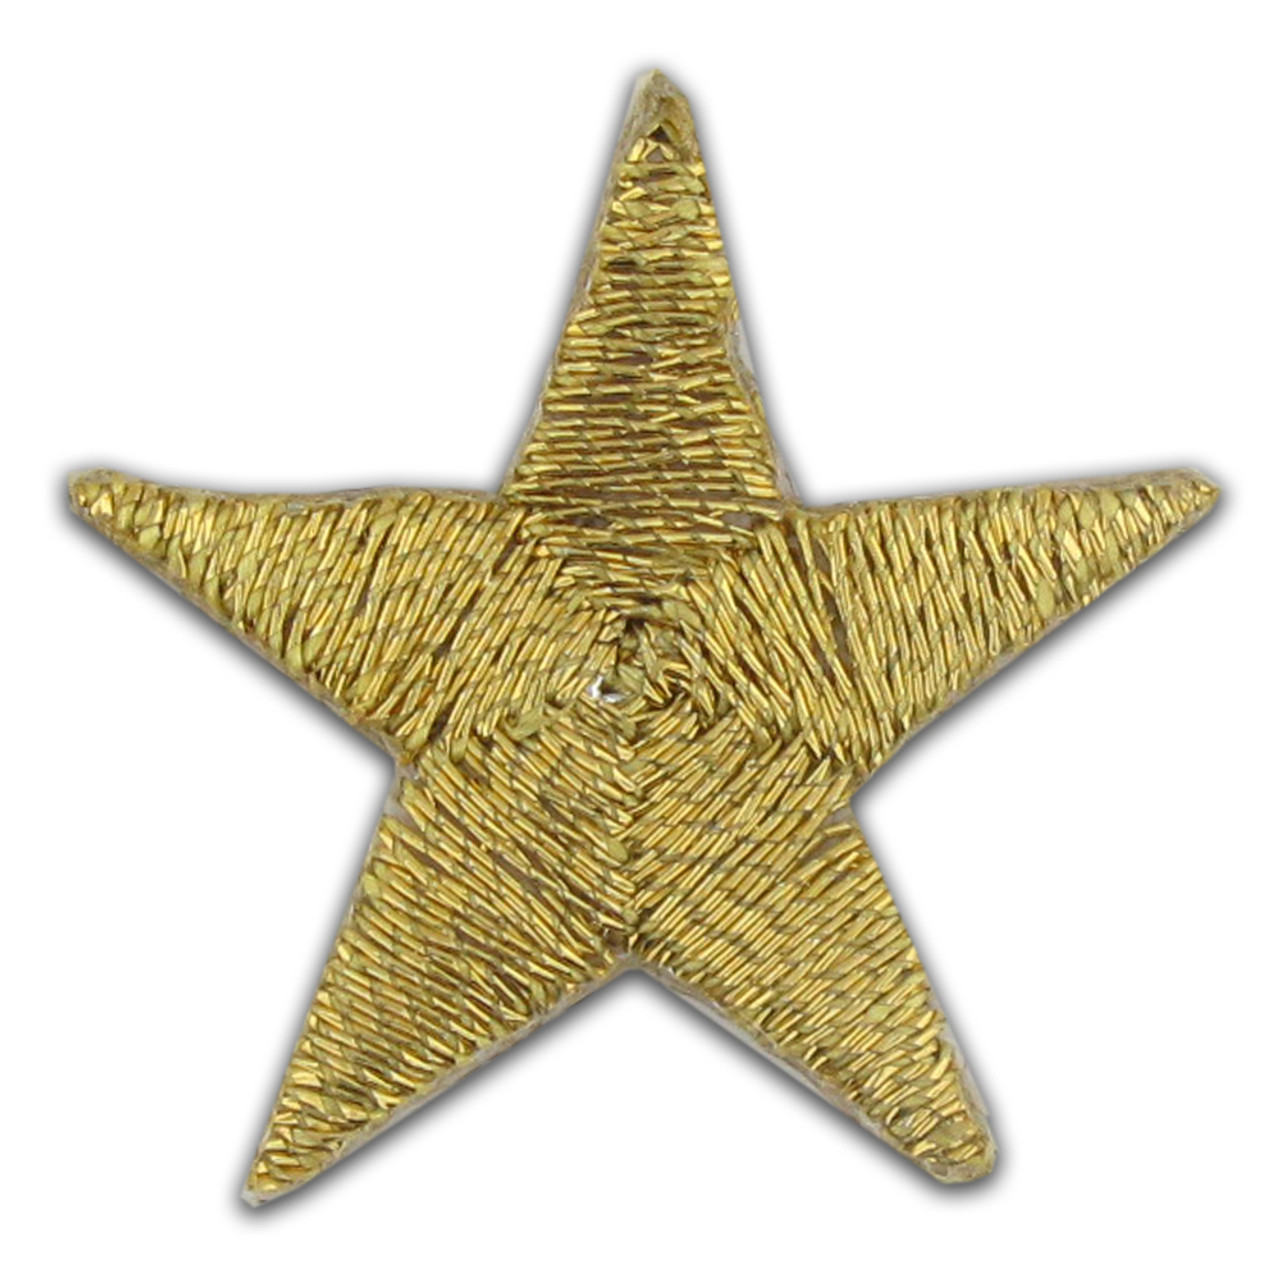 Applique - Gold Star